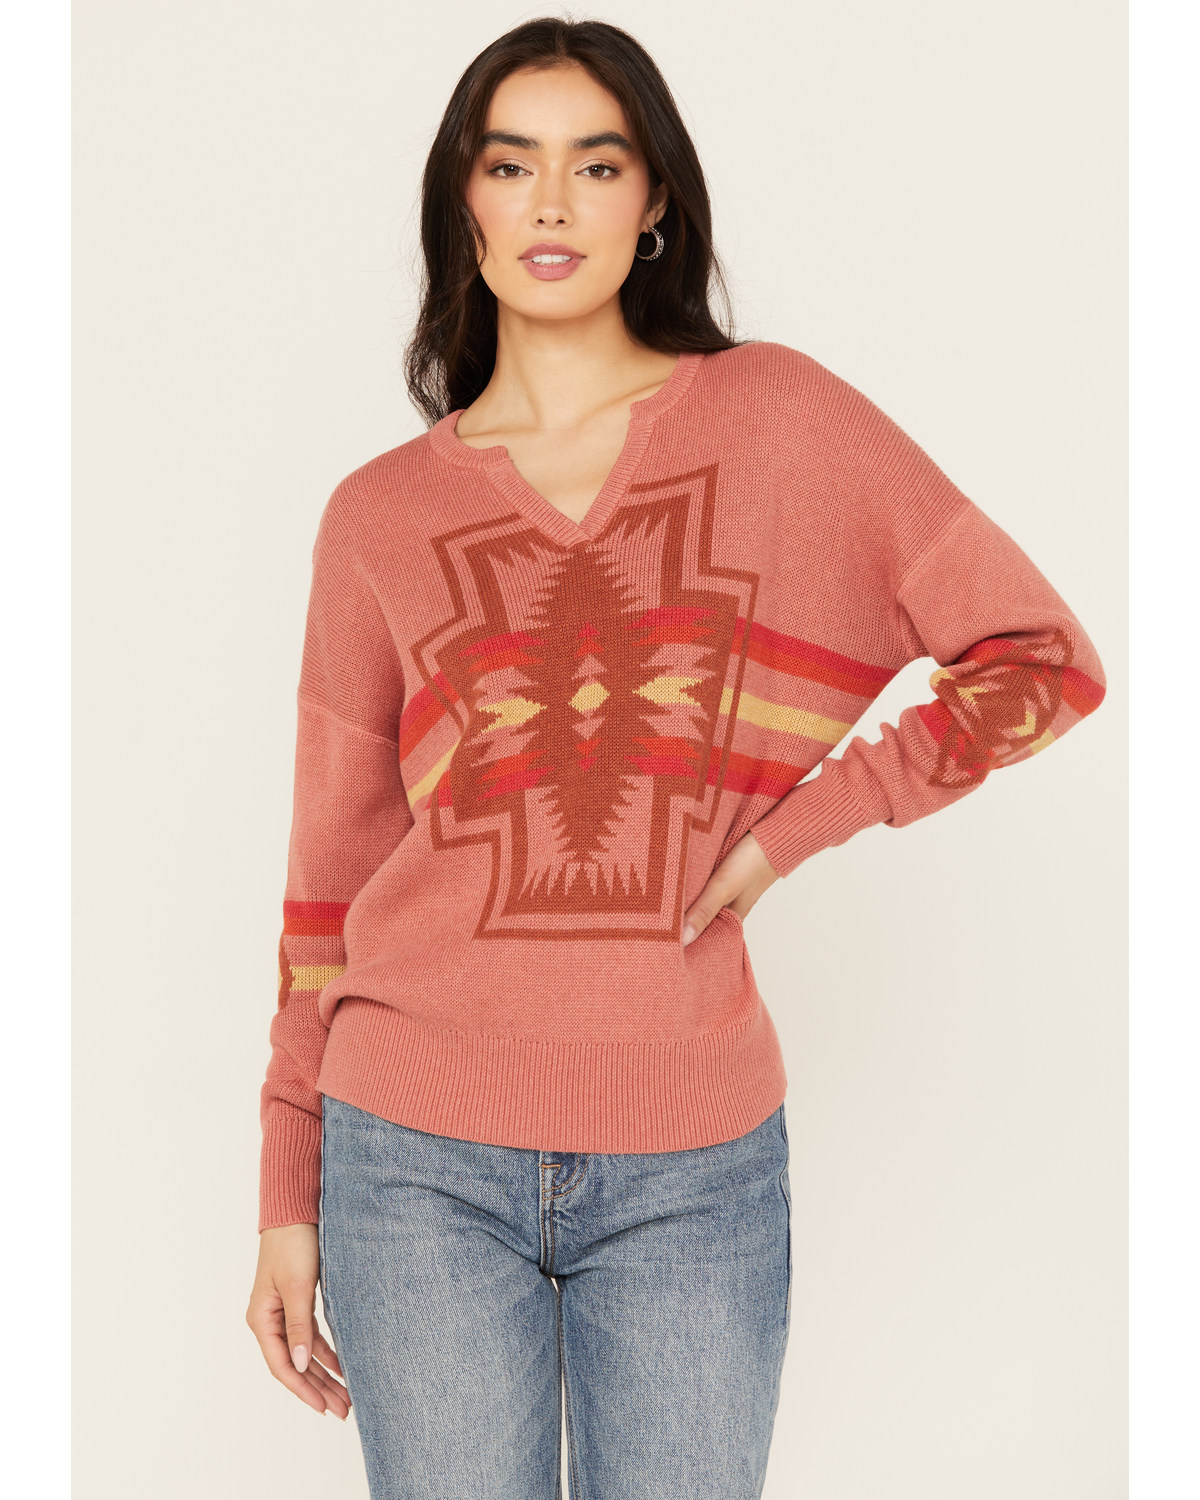 Pendleton Women's Graphic Pullover Sweater